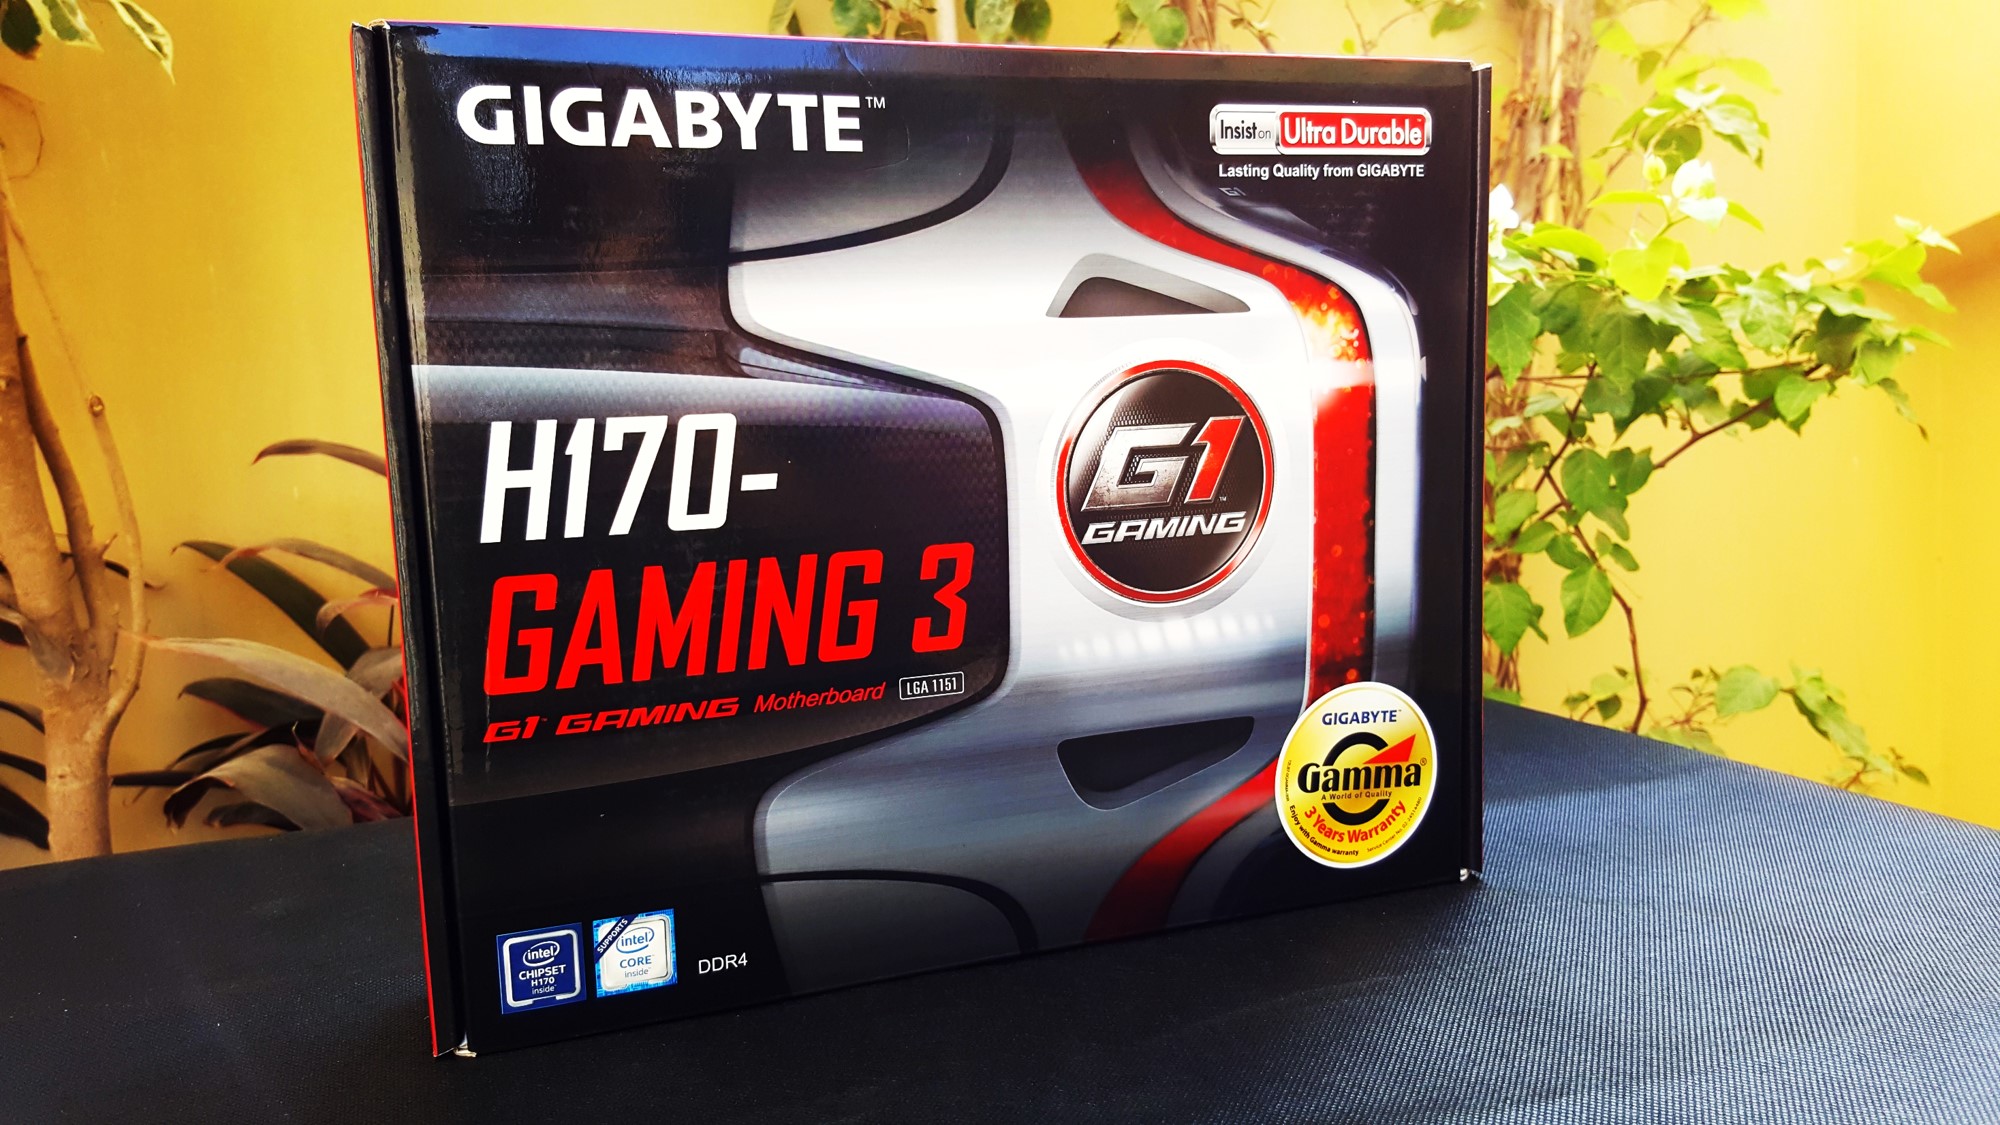 4-Gigabyte H170-Gaming 3 Box Front